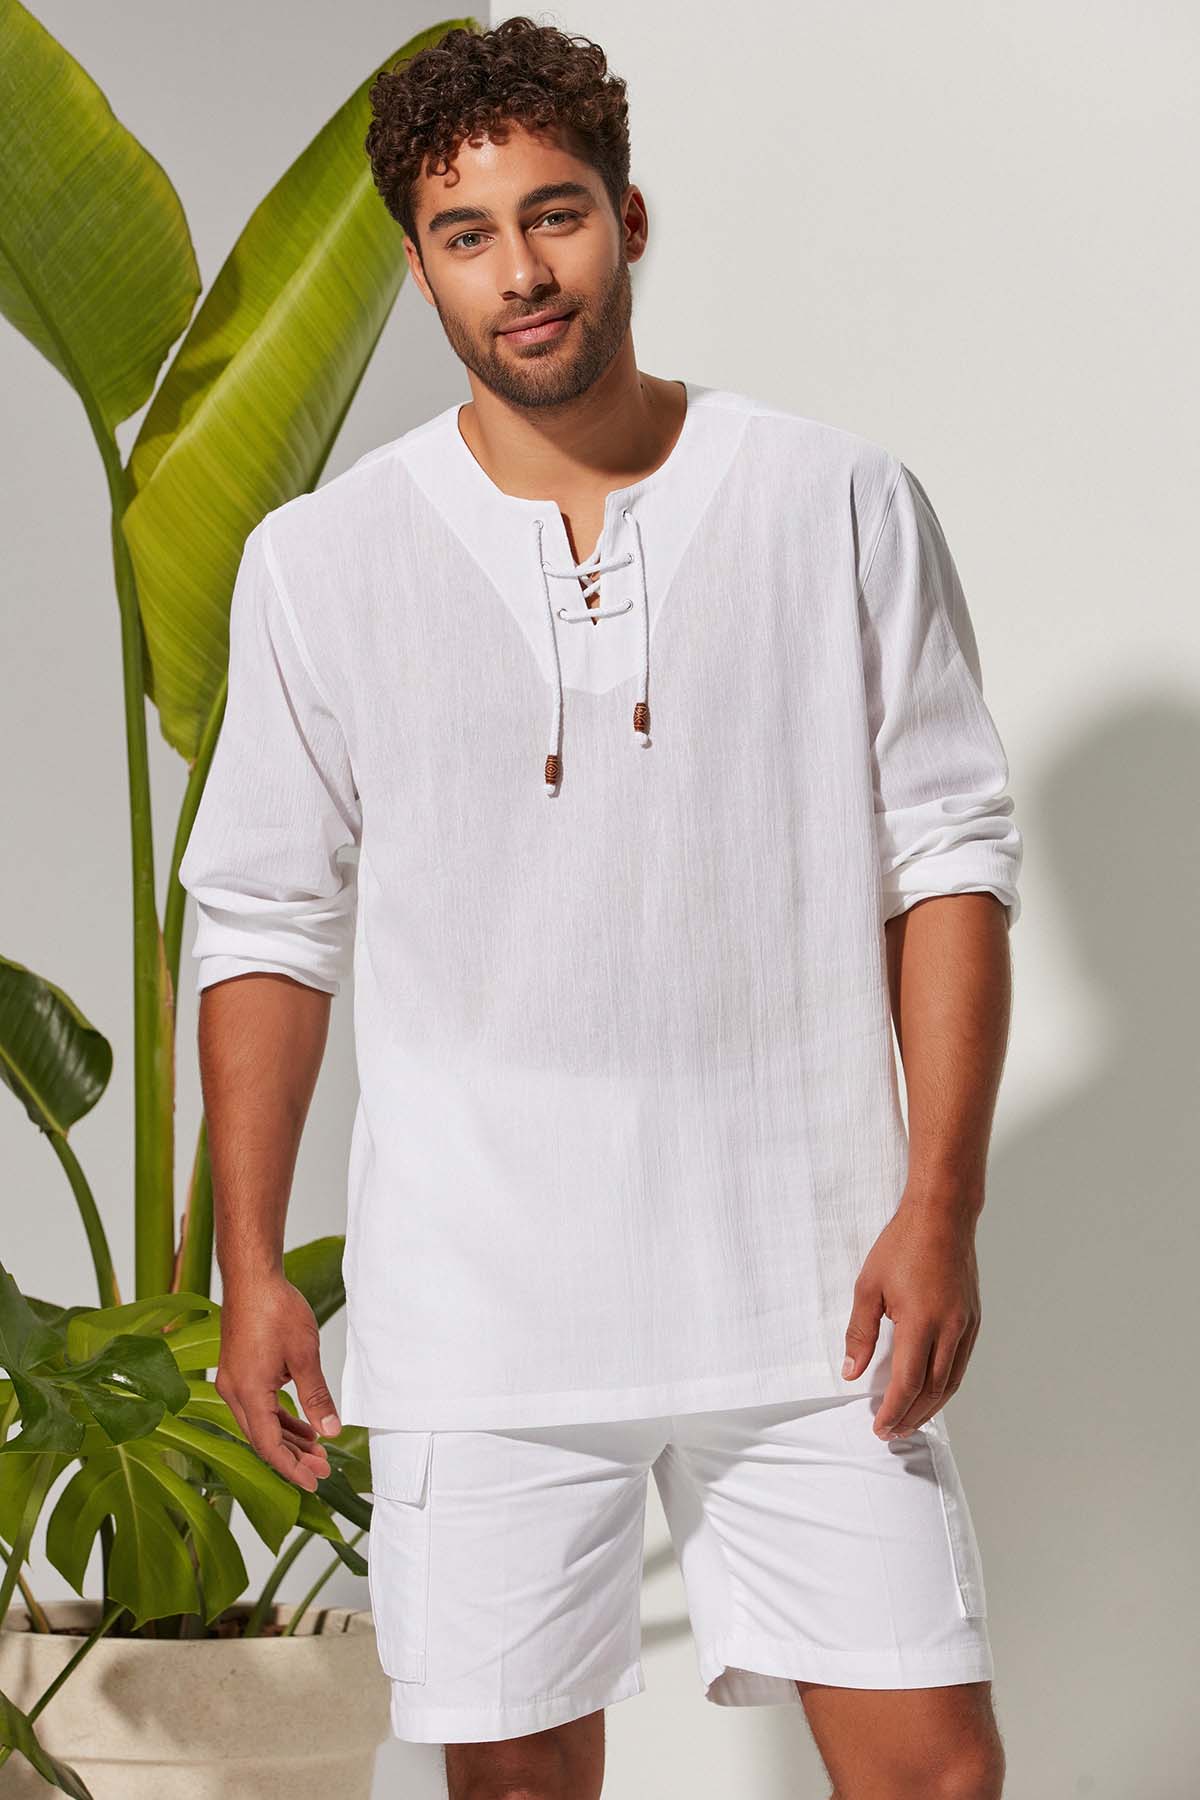 White by Nature - Uzun Kol Zımbalı Şile Bezi Erkek T-Shirt